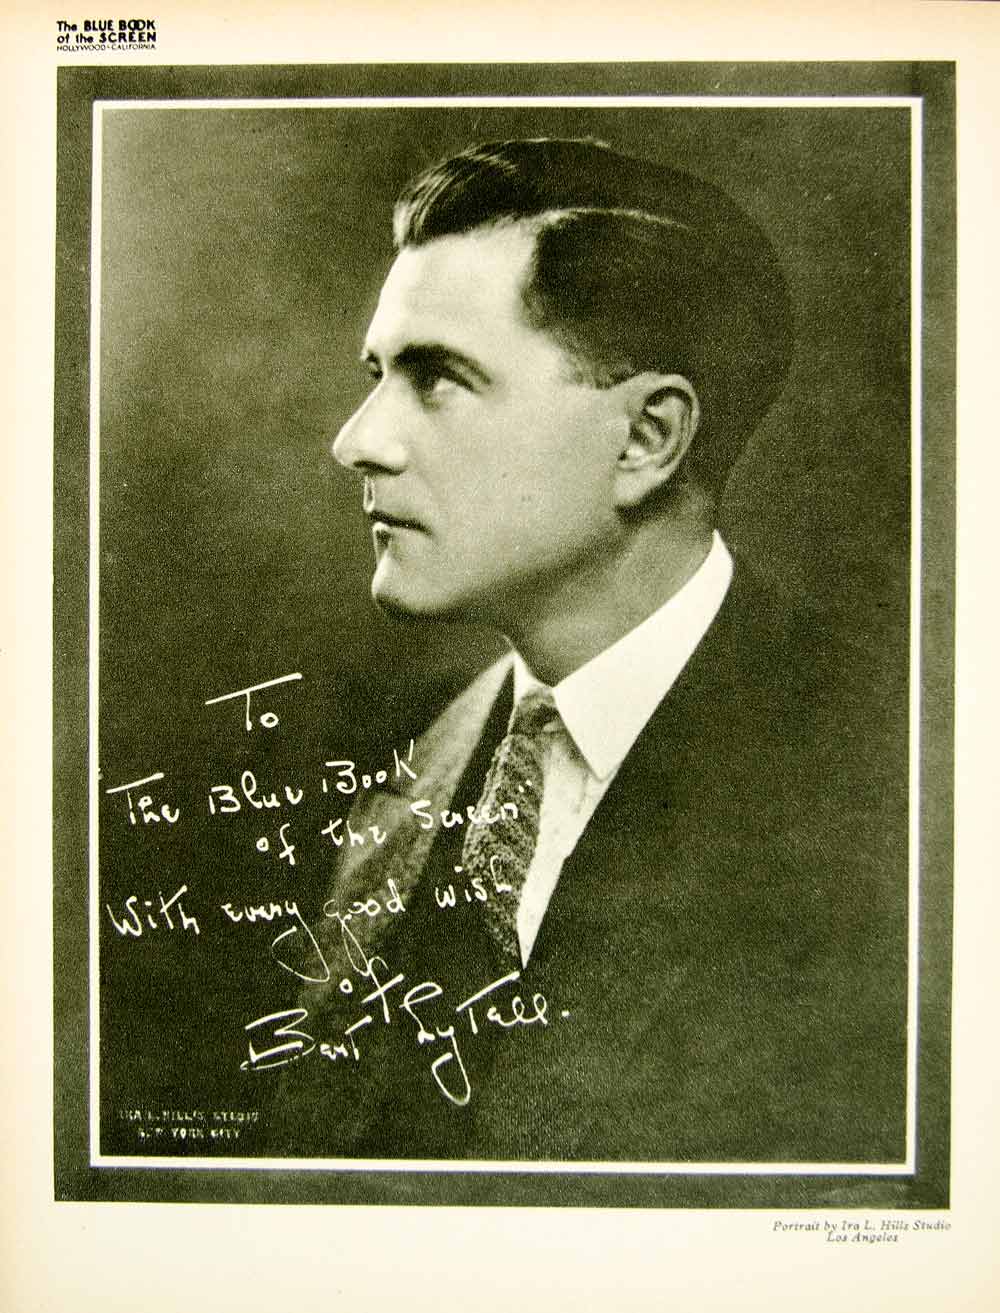 1923 Print Bert Lytell Silent Film Actor Movie Star Hollywood Portrait Bio BBS1